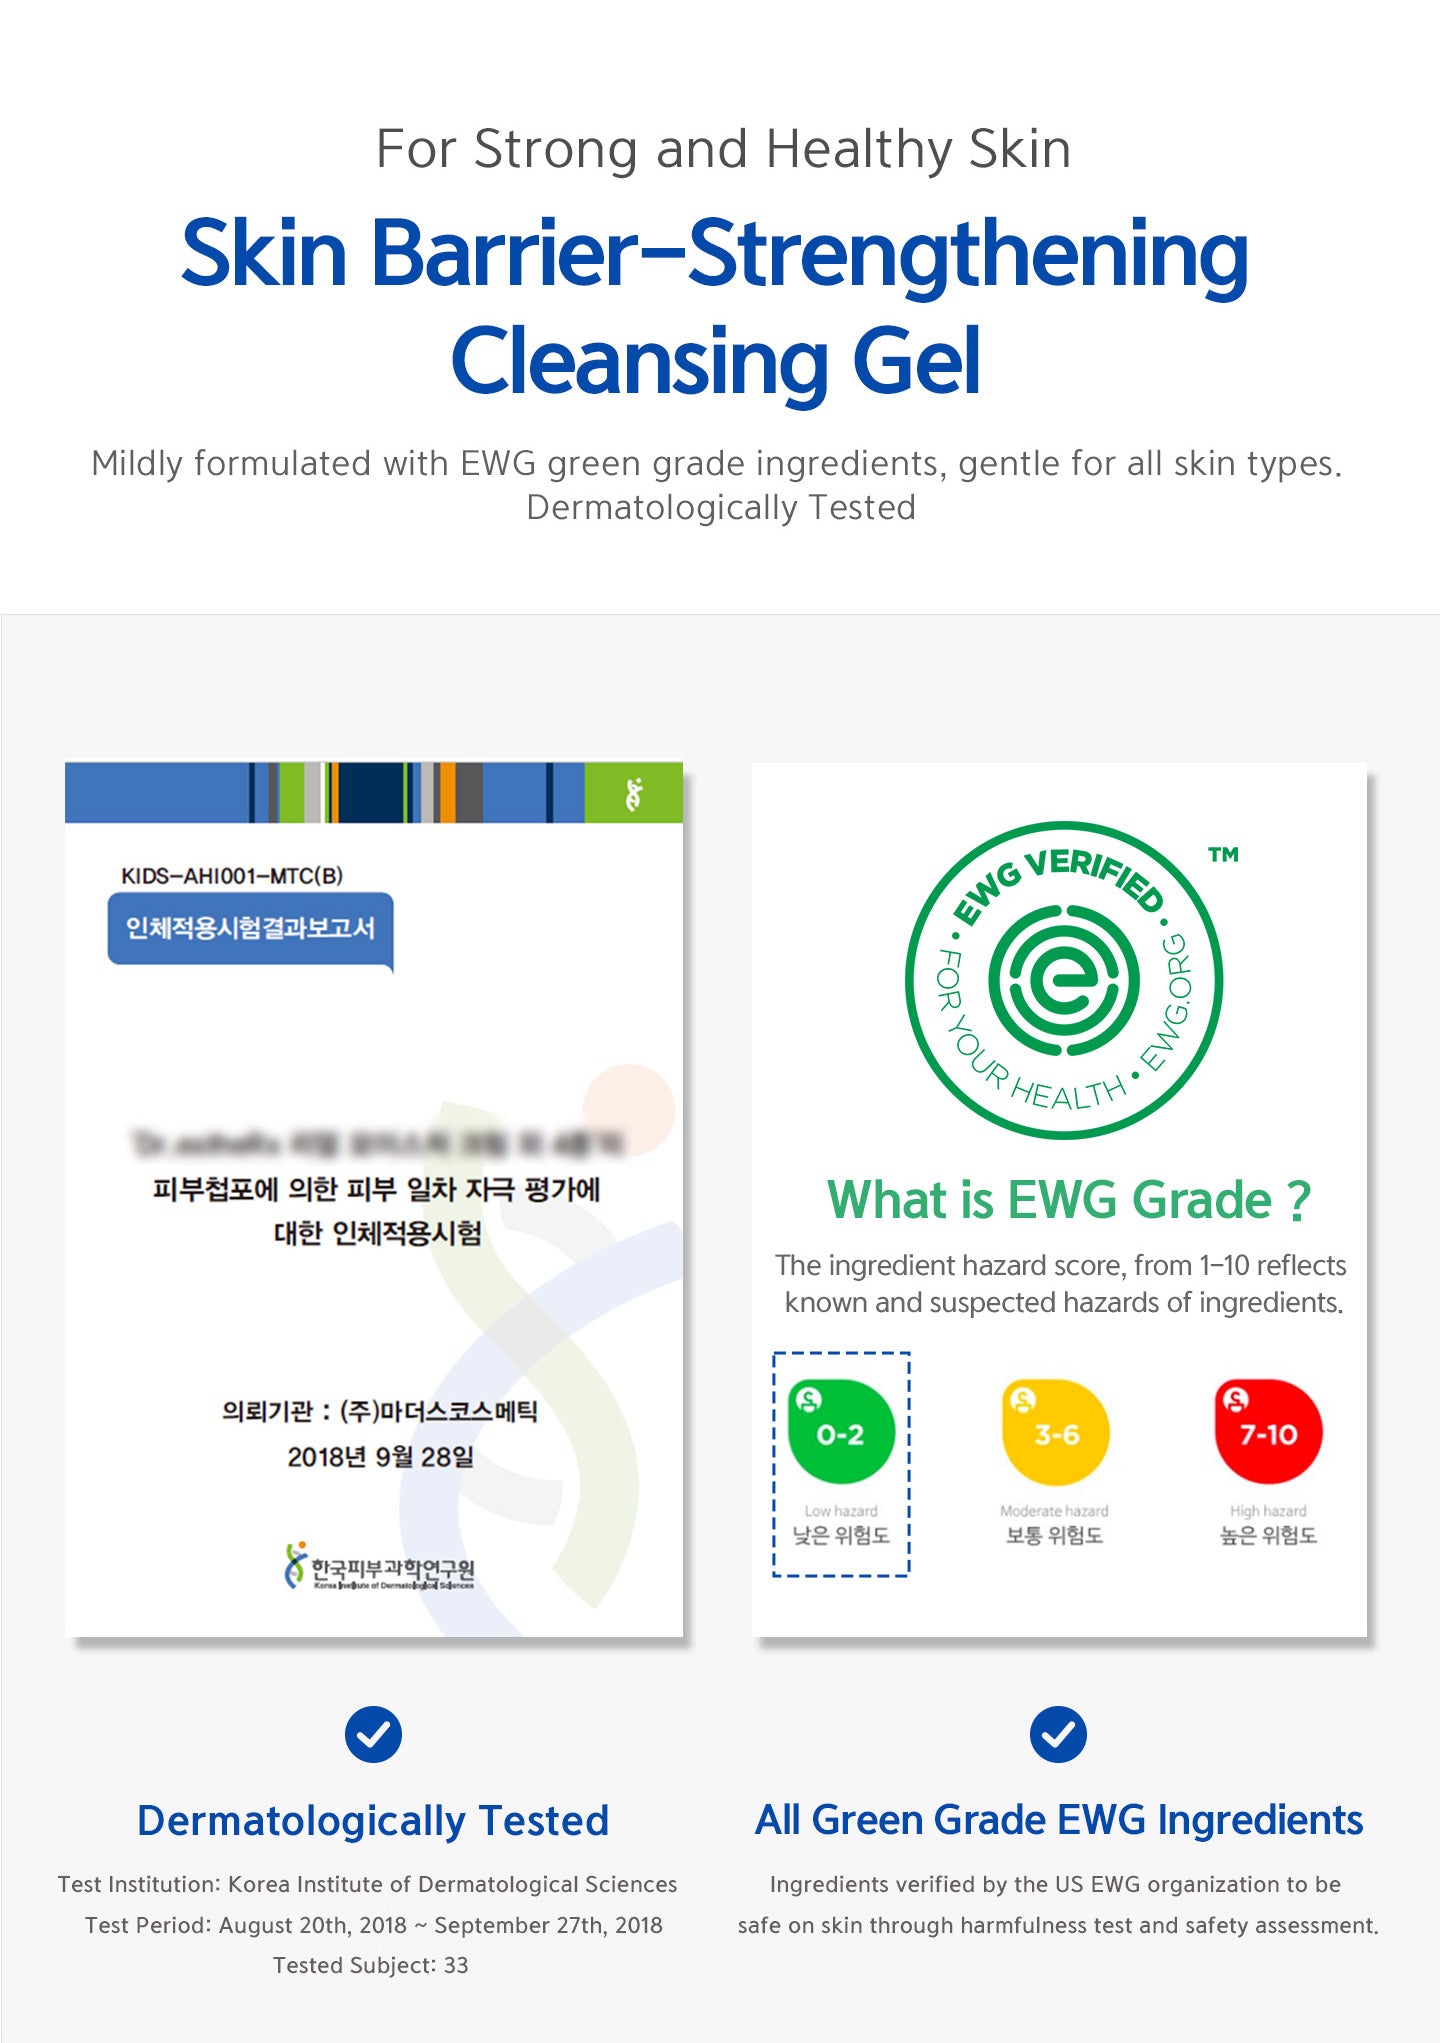 Skin barrier-strengthening cleansing gel. Dermatologically tested. All green grade EWG ingredients. 